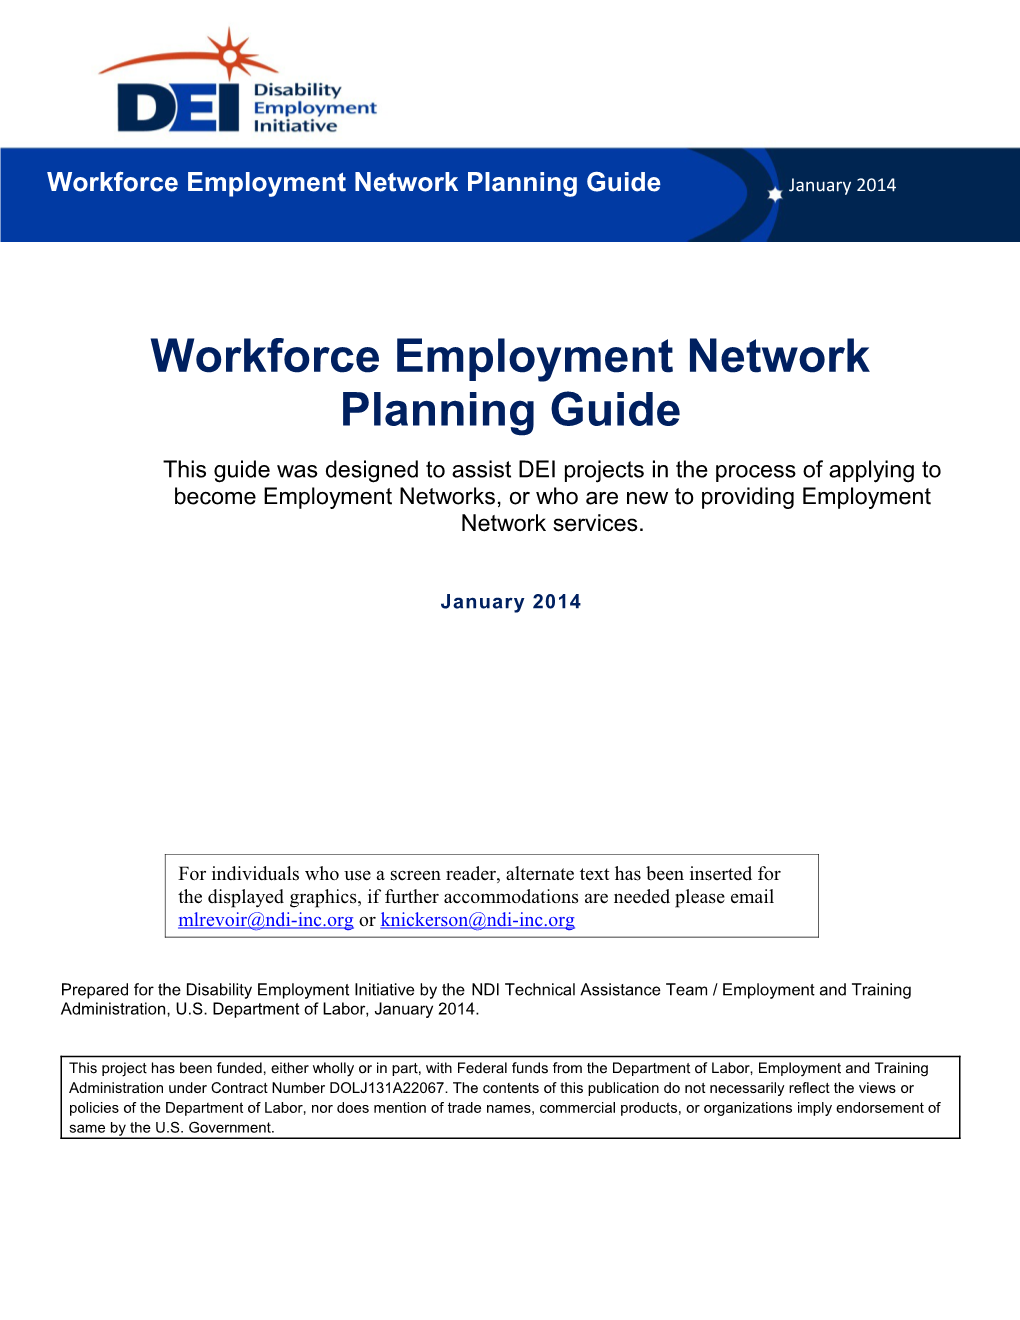 Employment Network (EN) Business Model Checklist & Planning Tool